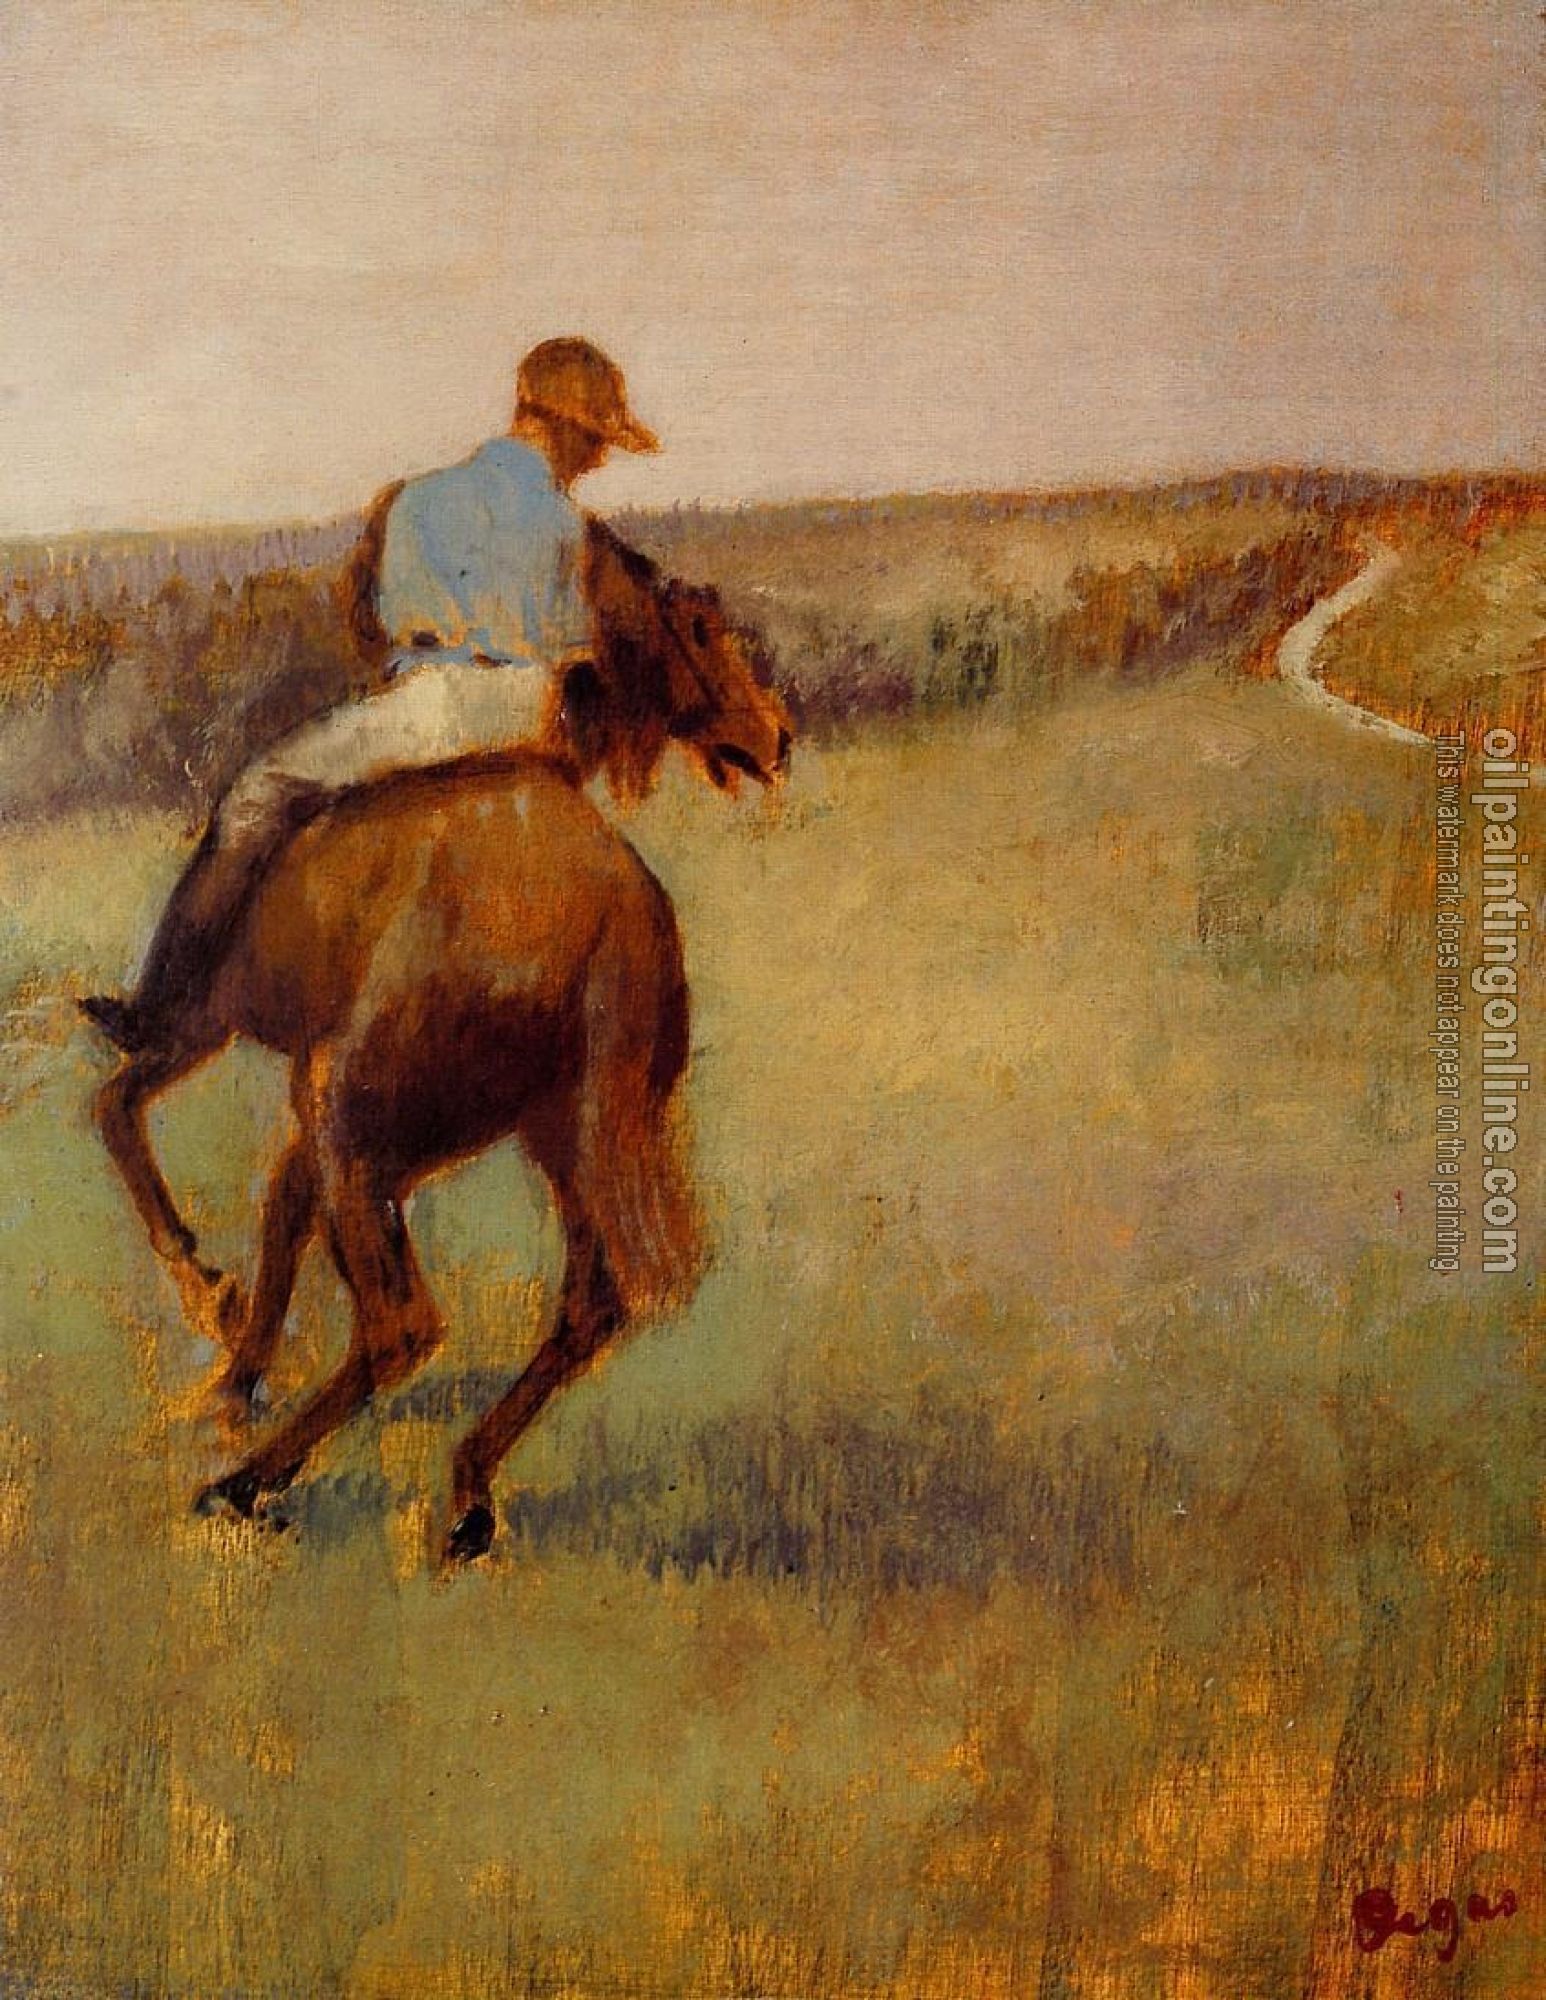 Degas, Edgar - Jockey in Blue on a Chestnut Horse